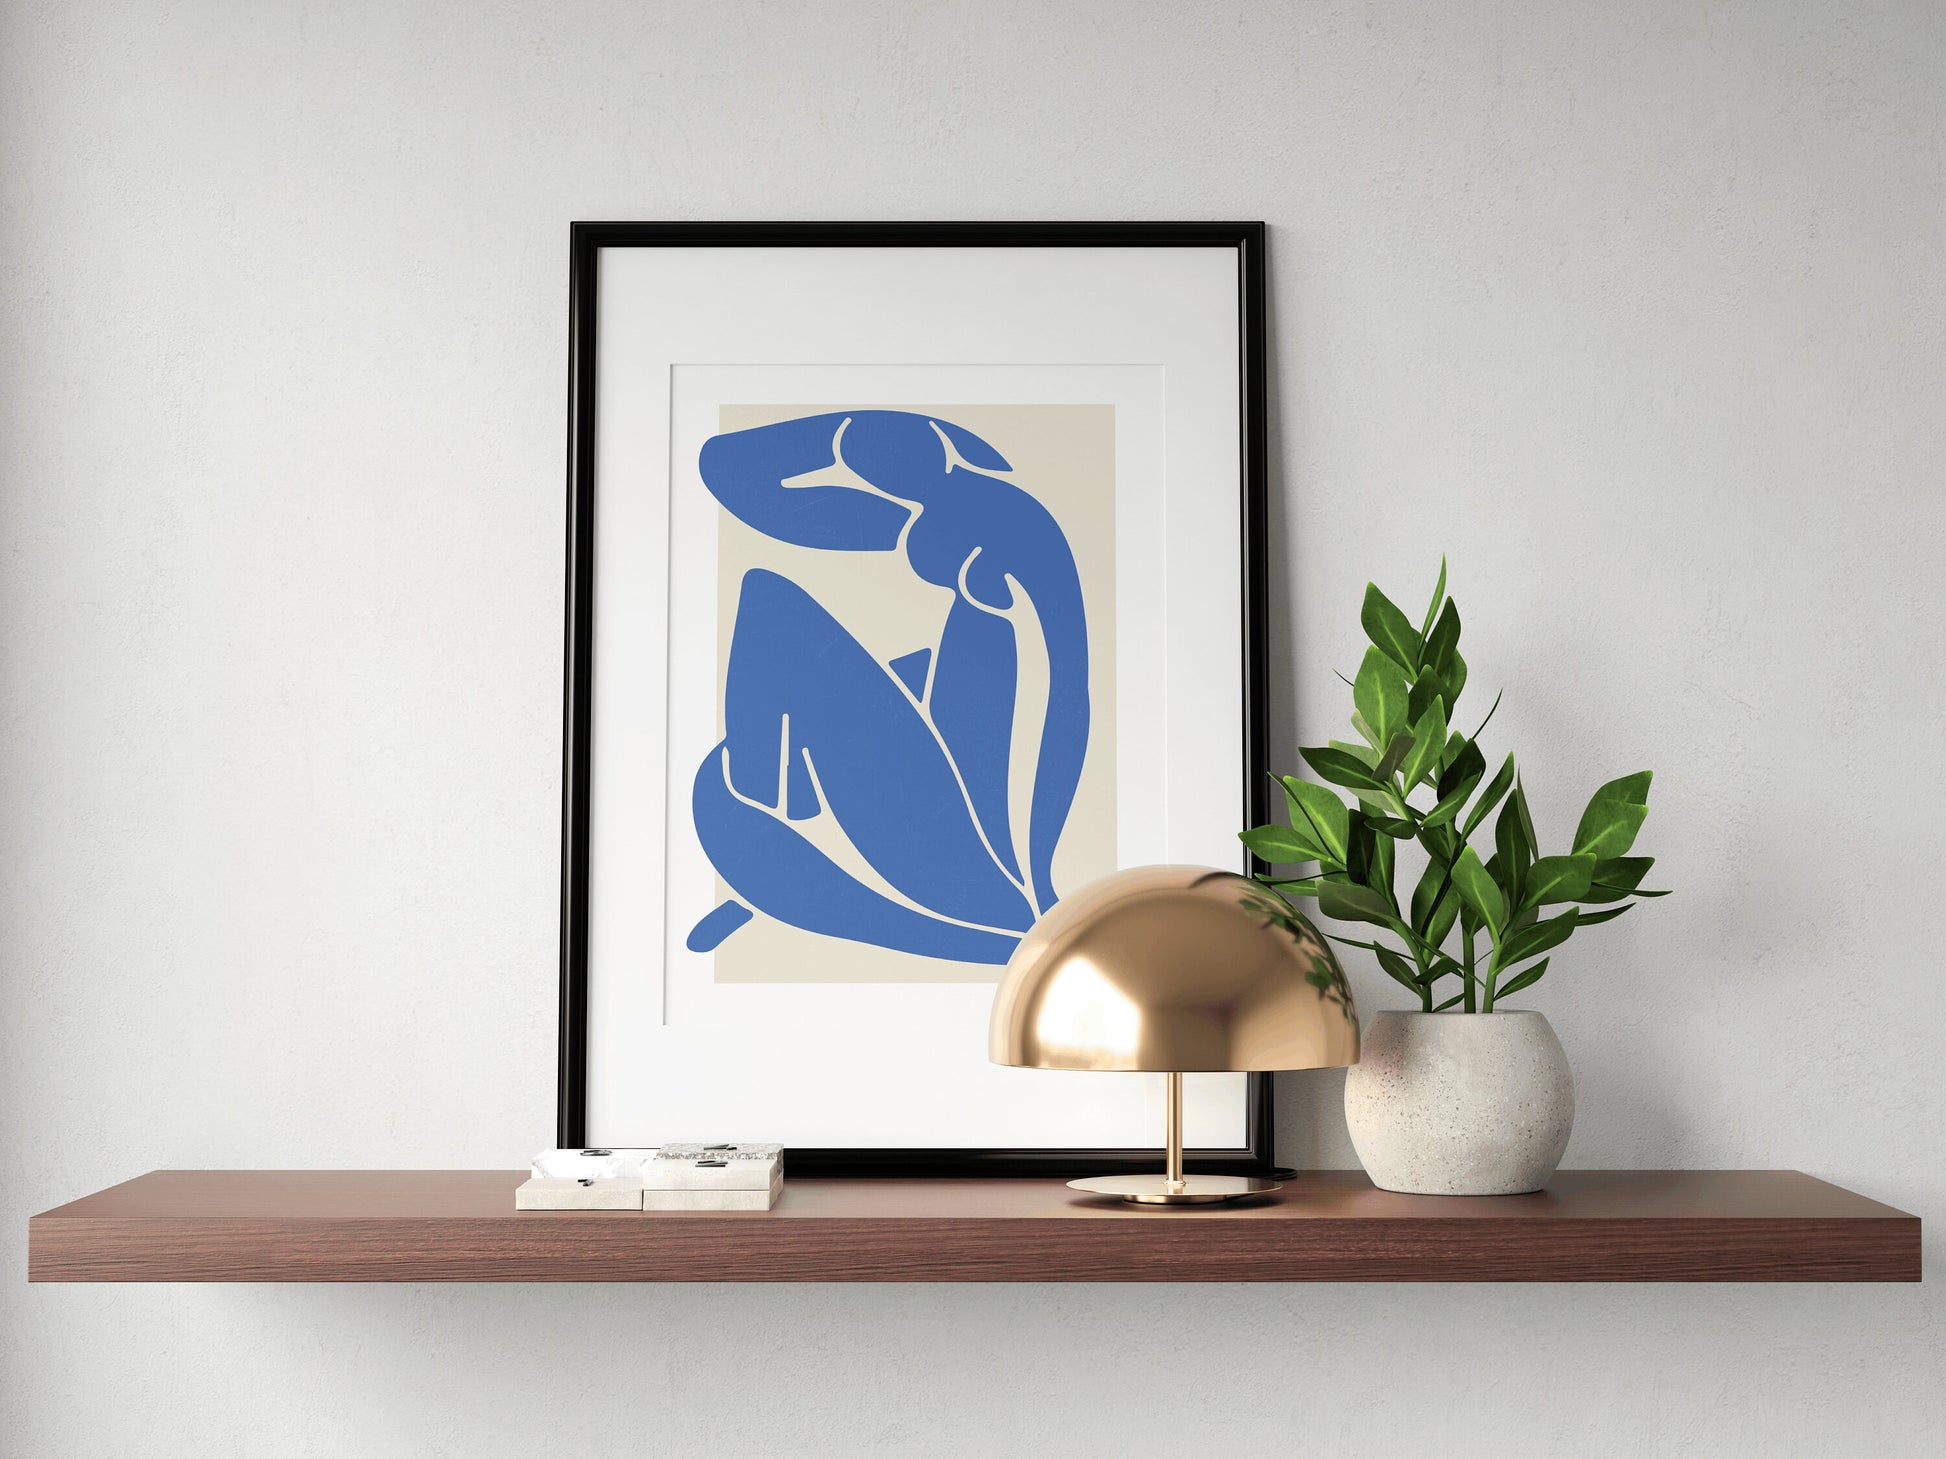 Matisse Inspired Print, Blue Nude Print, Matisse Blue Nude, Matisse Art Print, Home Decor, Matisse Art Print, Henri Matisse Nu Bleu,